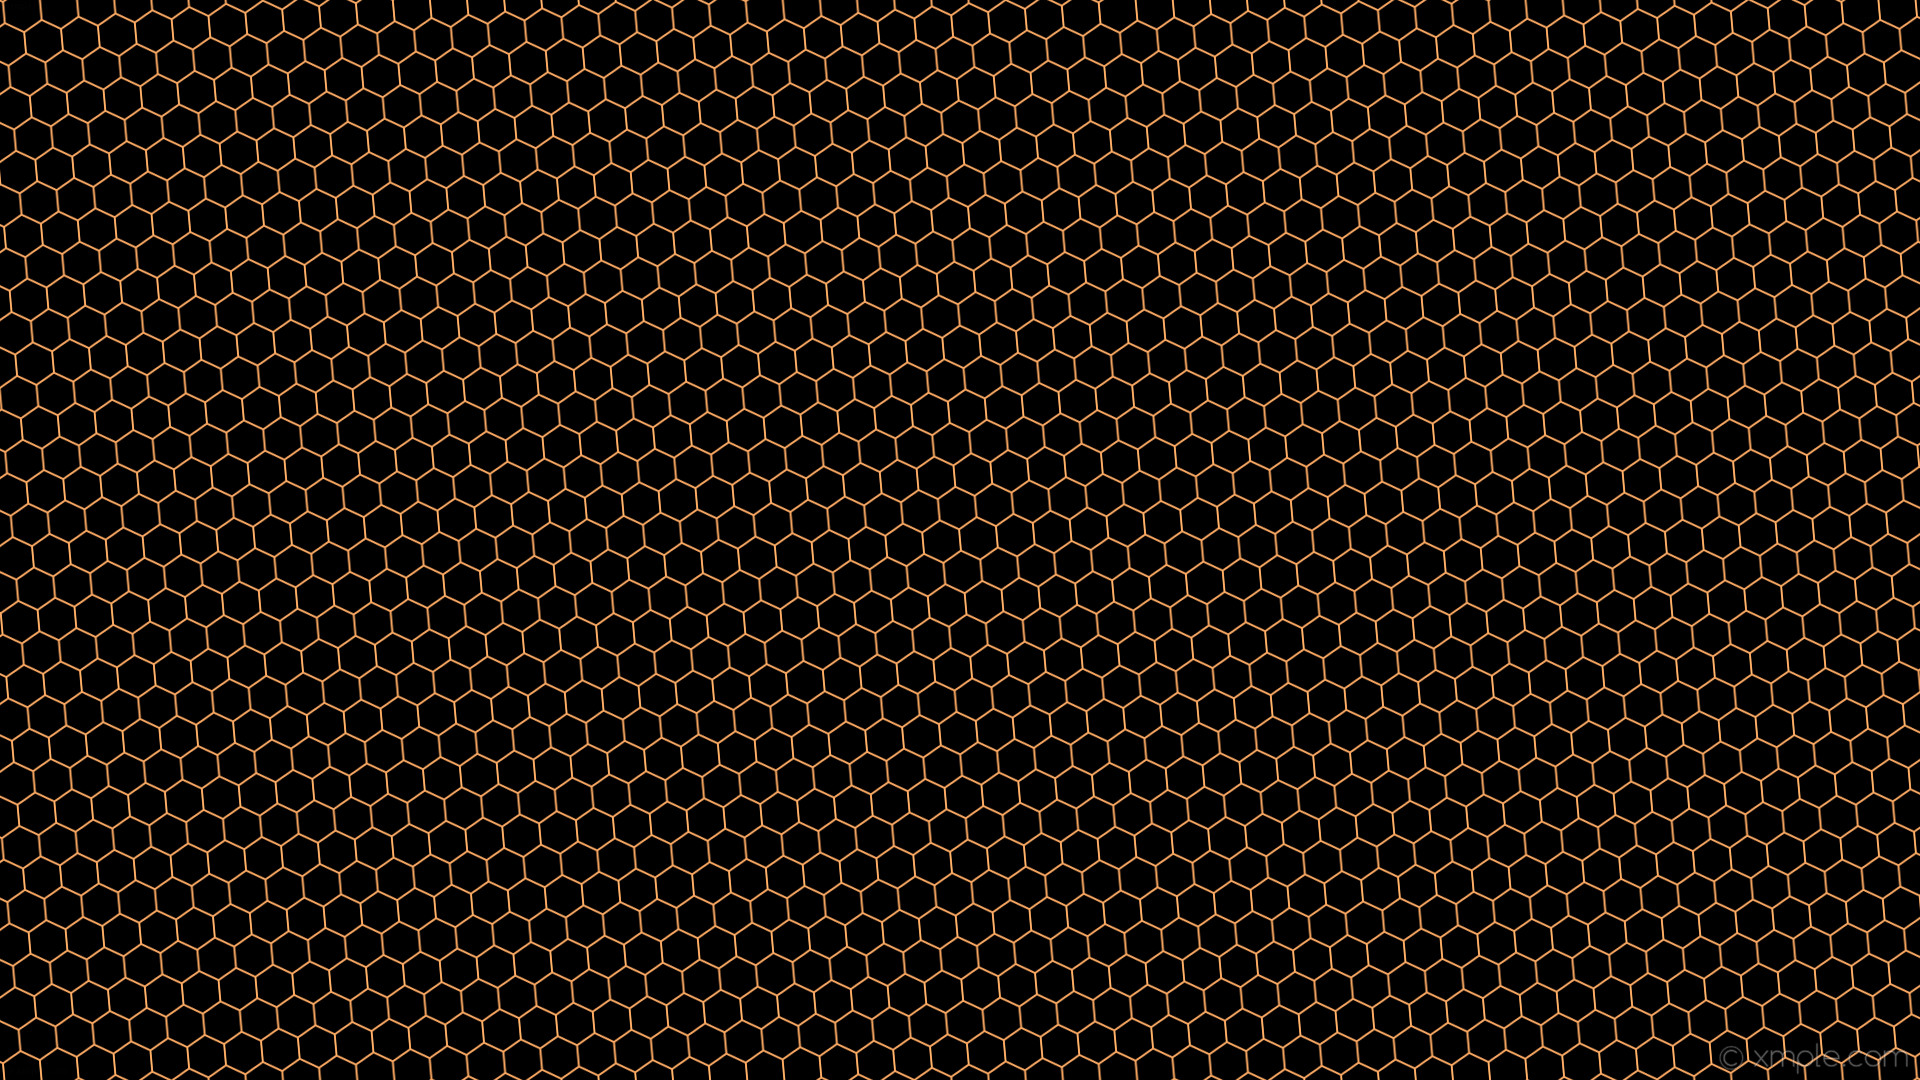 1920x1080 wallpaper beehive black honeycomb brown hexagon sandy brown #000000 #f4a460  diagonal 5Â° 2px